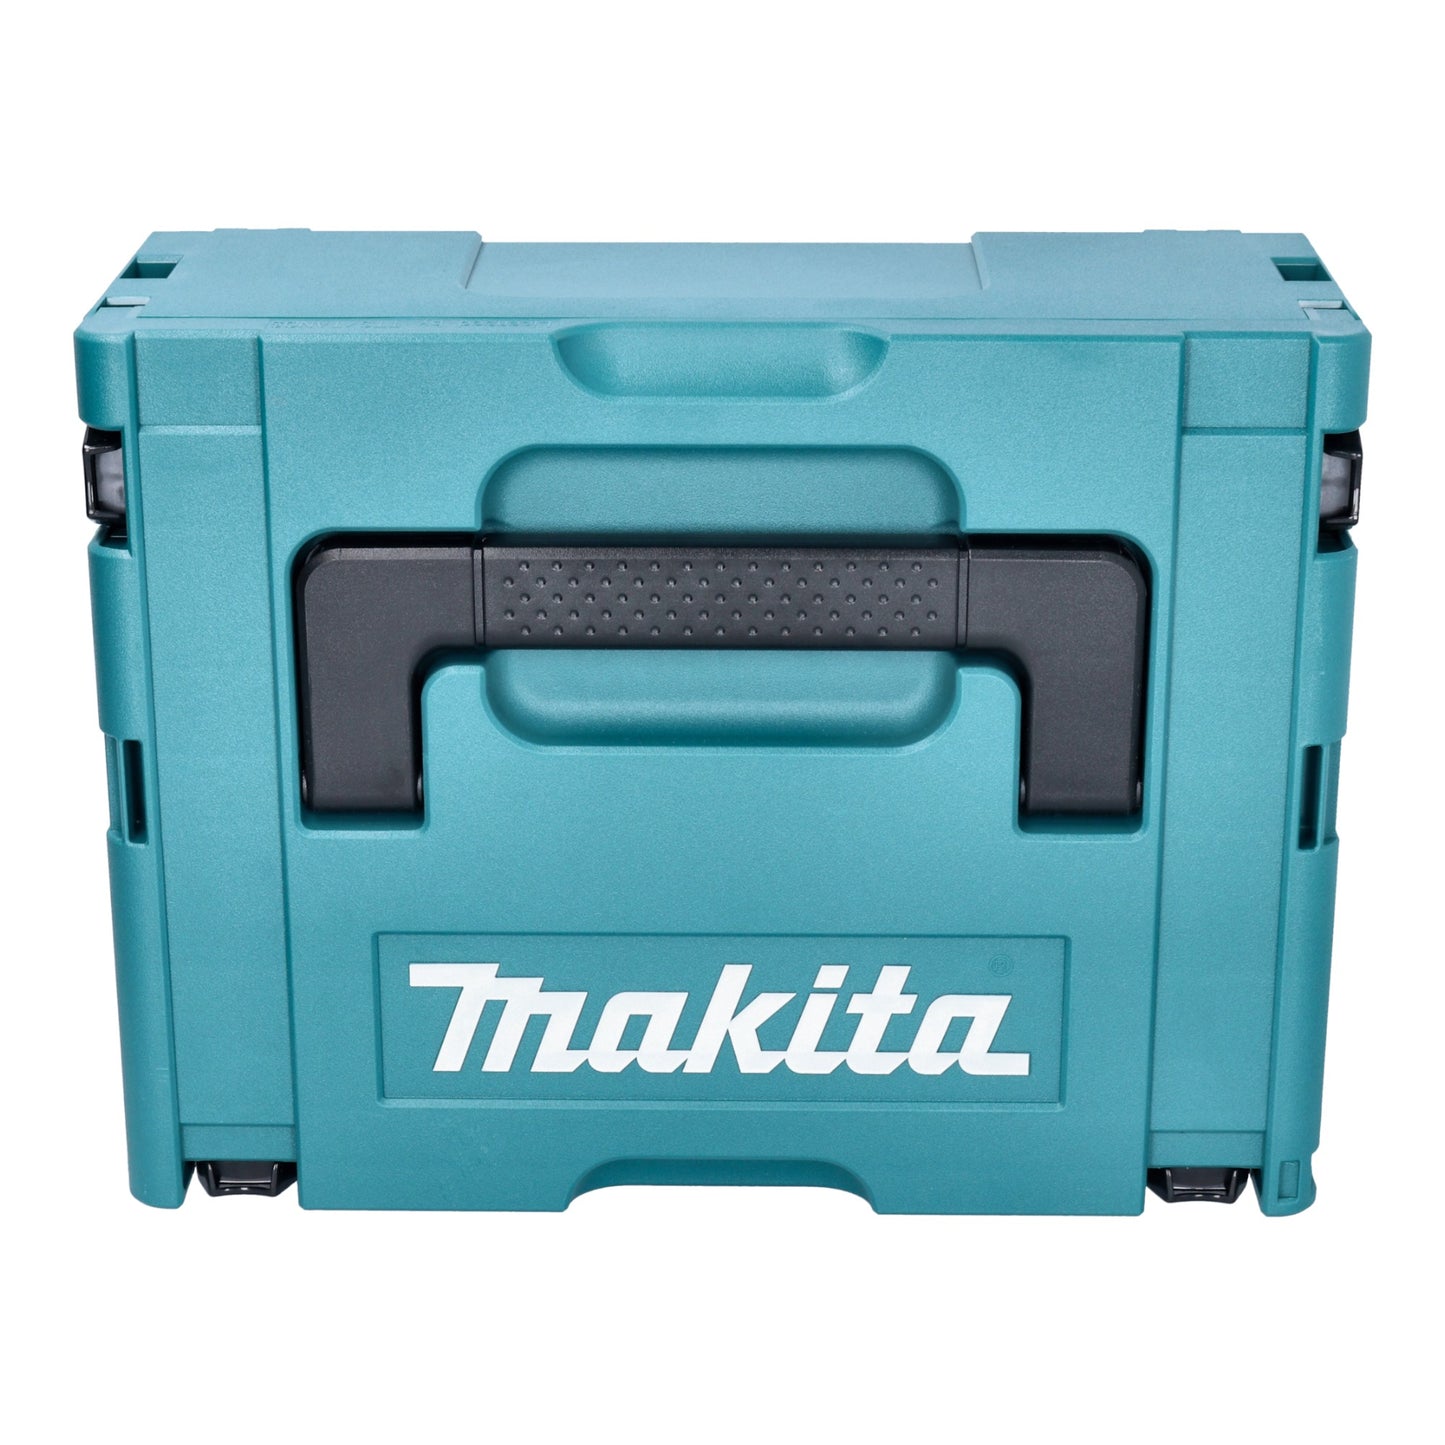 Makita DDF 083 RMJ Akku Bohrschrauber 18 V 40 Nm 1/4'' Brushless + 2x Akku 4,0 Ah + Ladegerät + Makpac